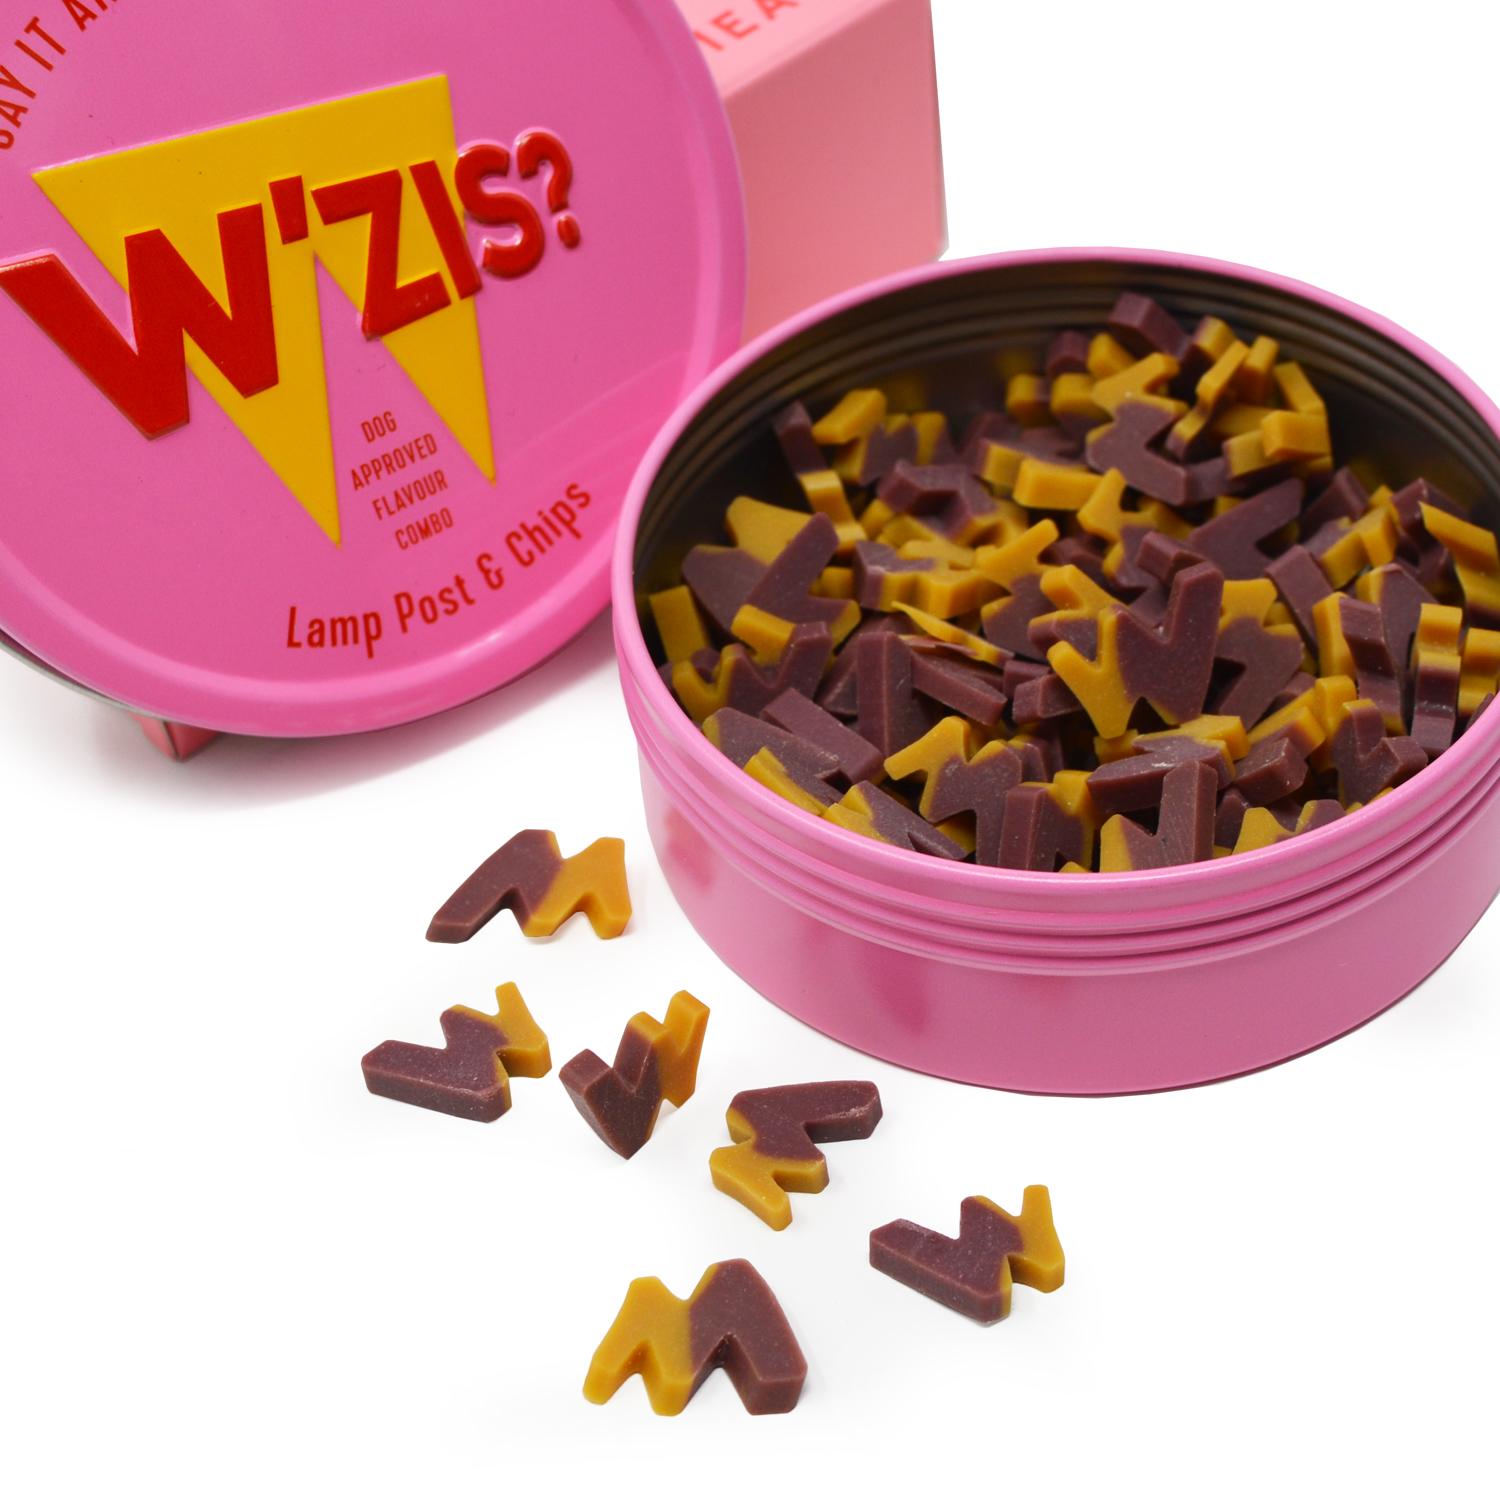 W'ZIS? 'Lamp Post & Chips' mini vegan dog chews